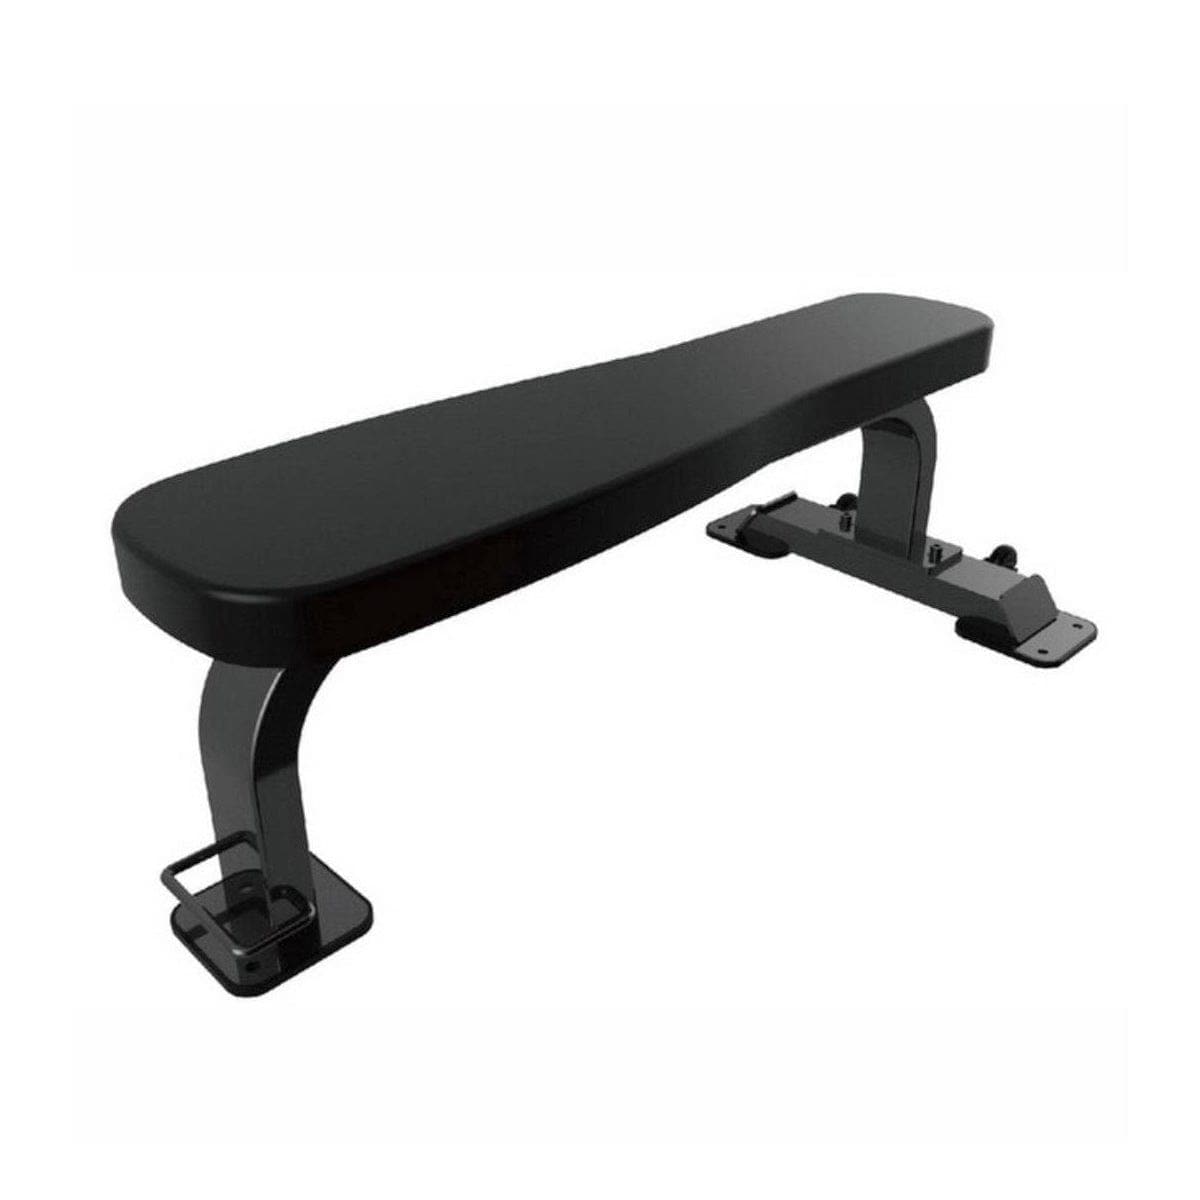 LSLLC Adjustable Bench Impluse Fitness SL7035 Flat Bench